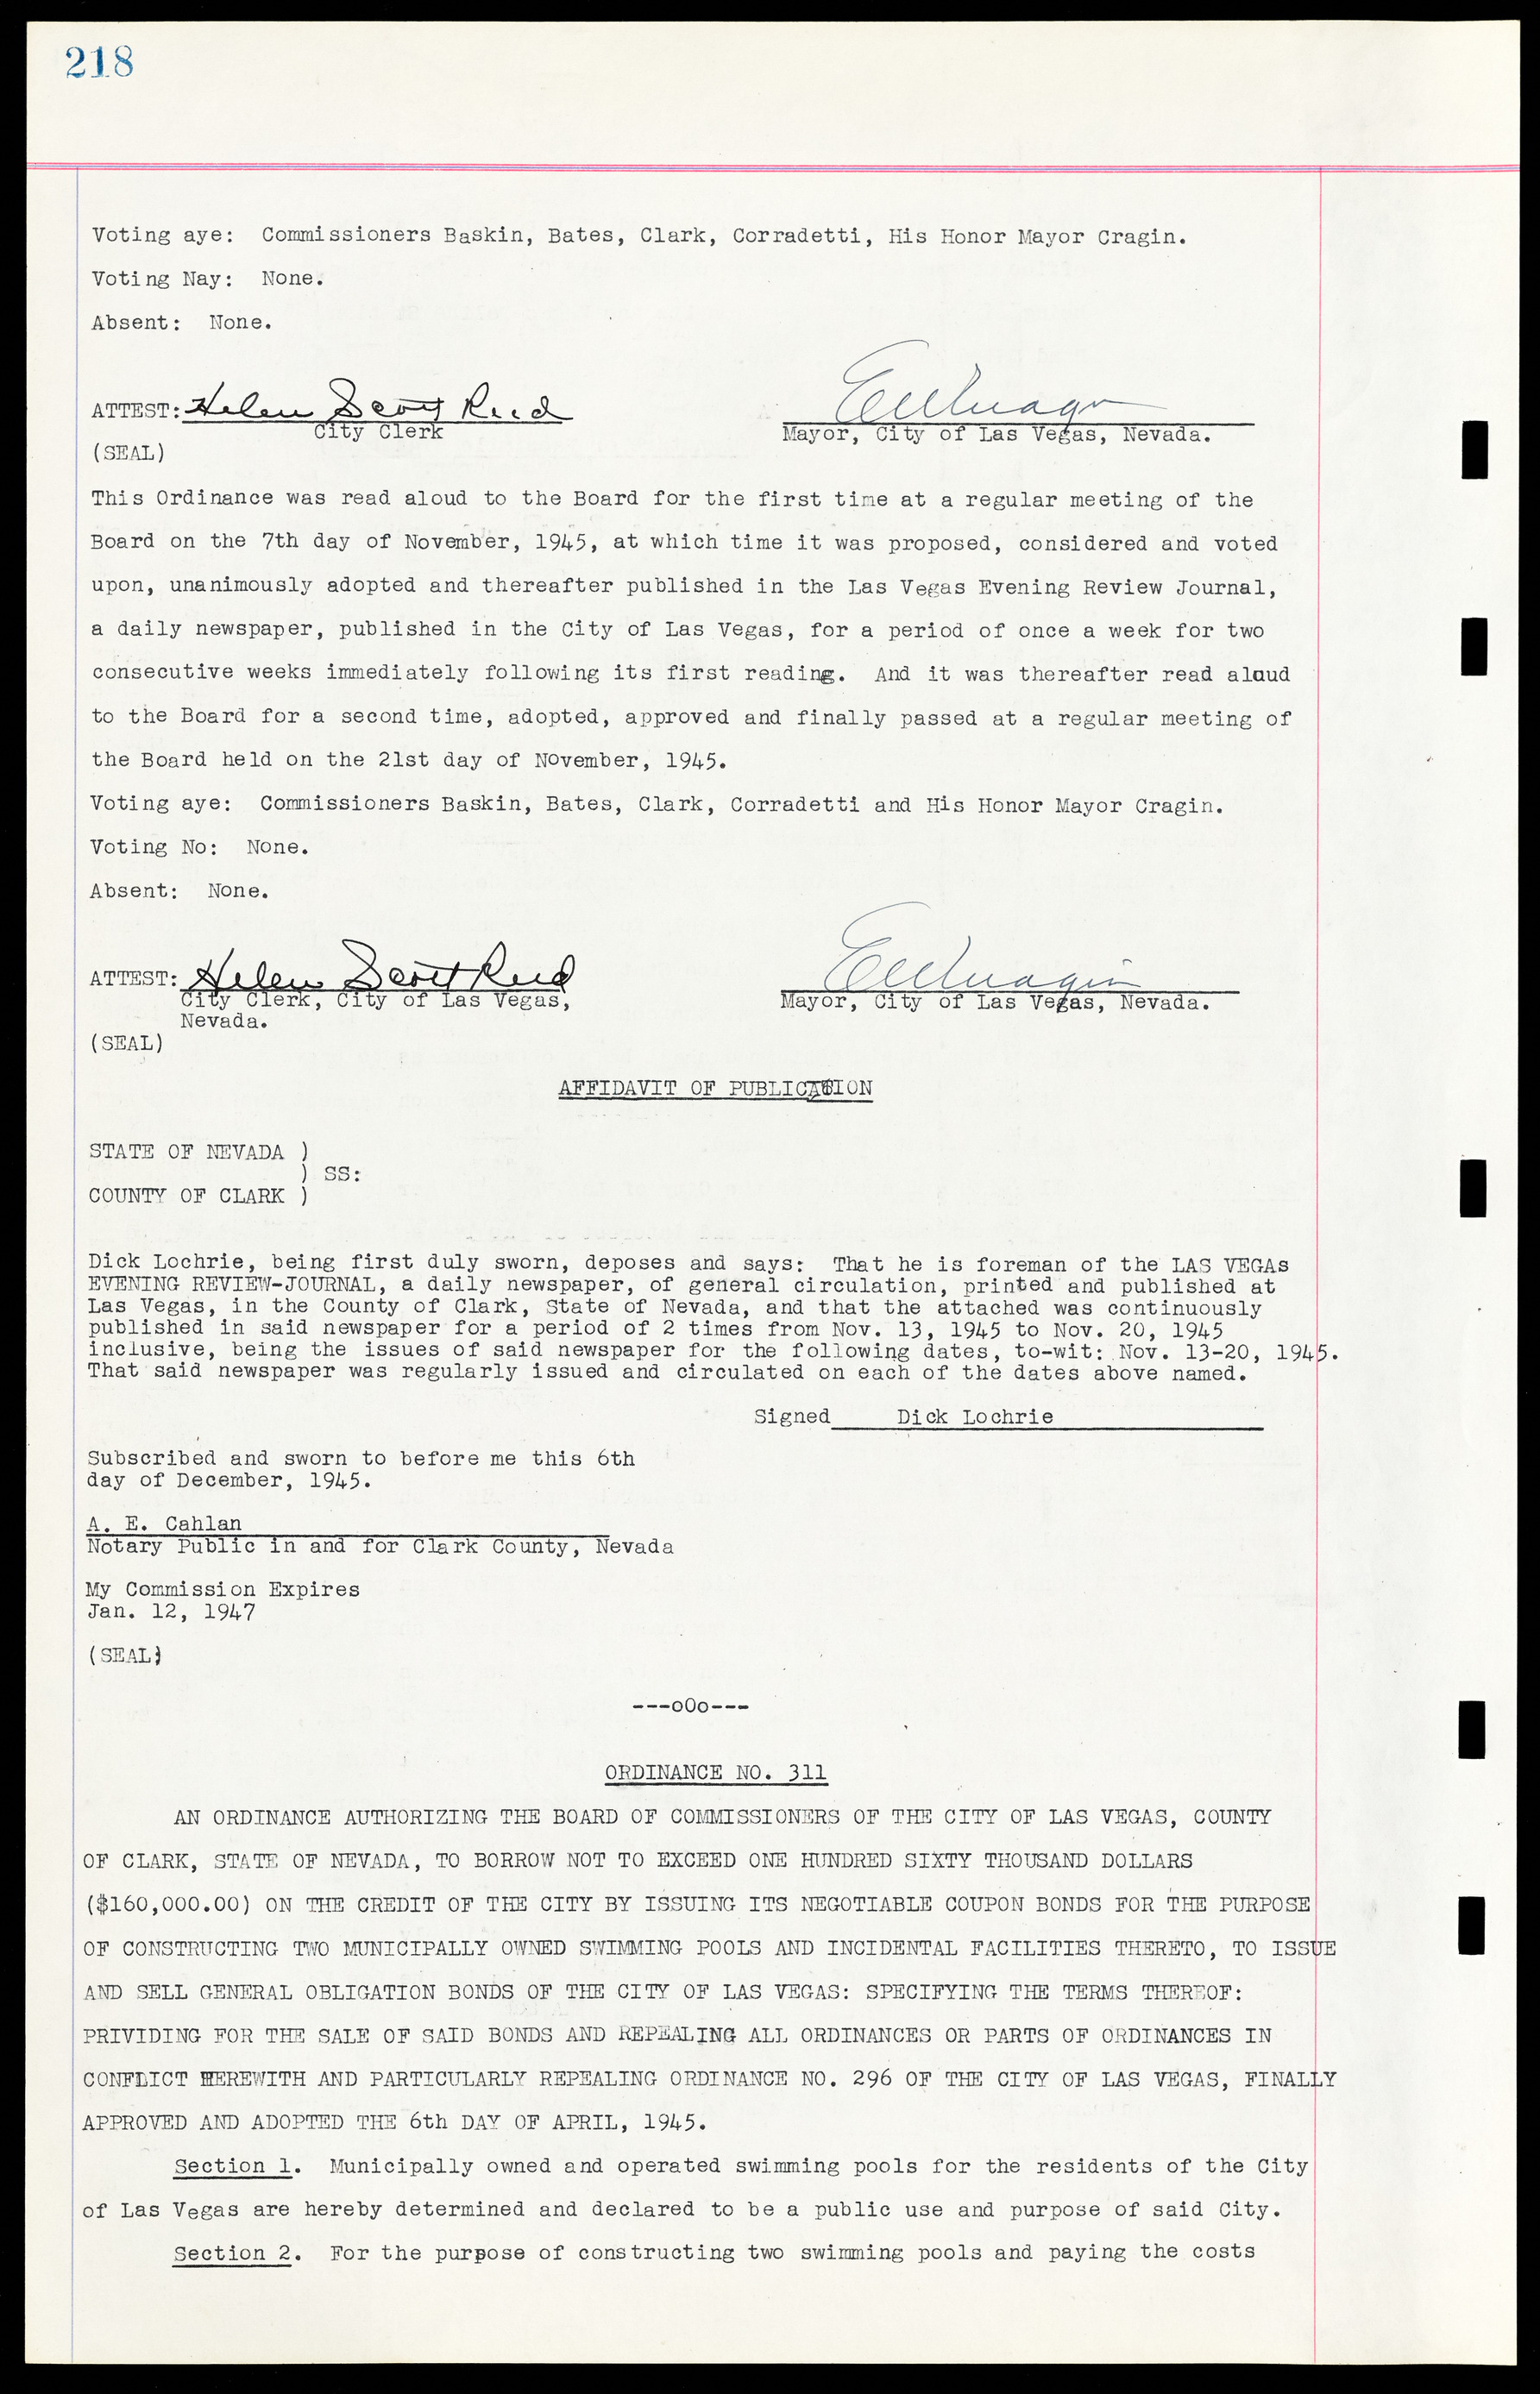 Las Vegas City Ordinances, March 31, 1933 to October 25, 1950, lvc000014-247